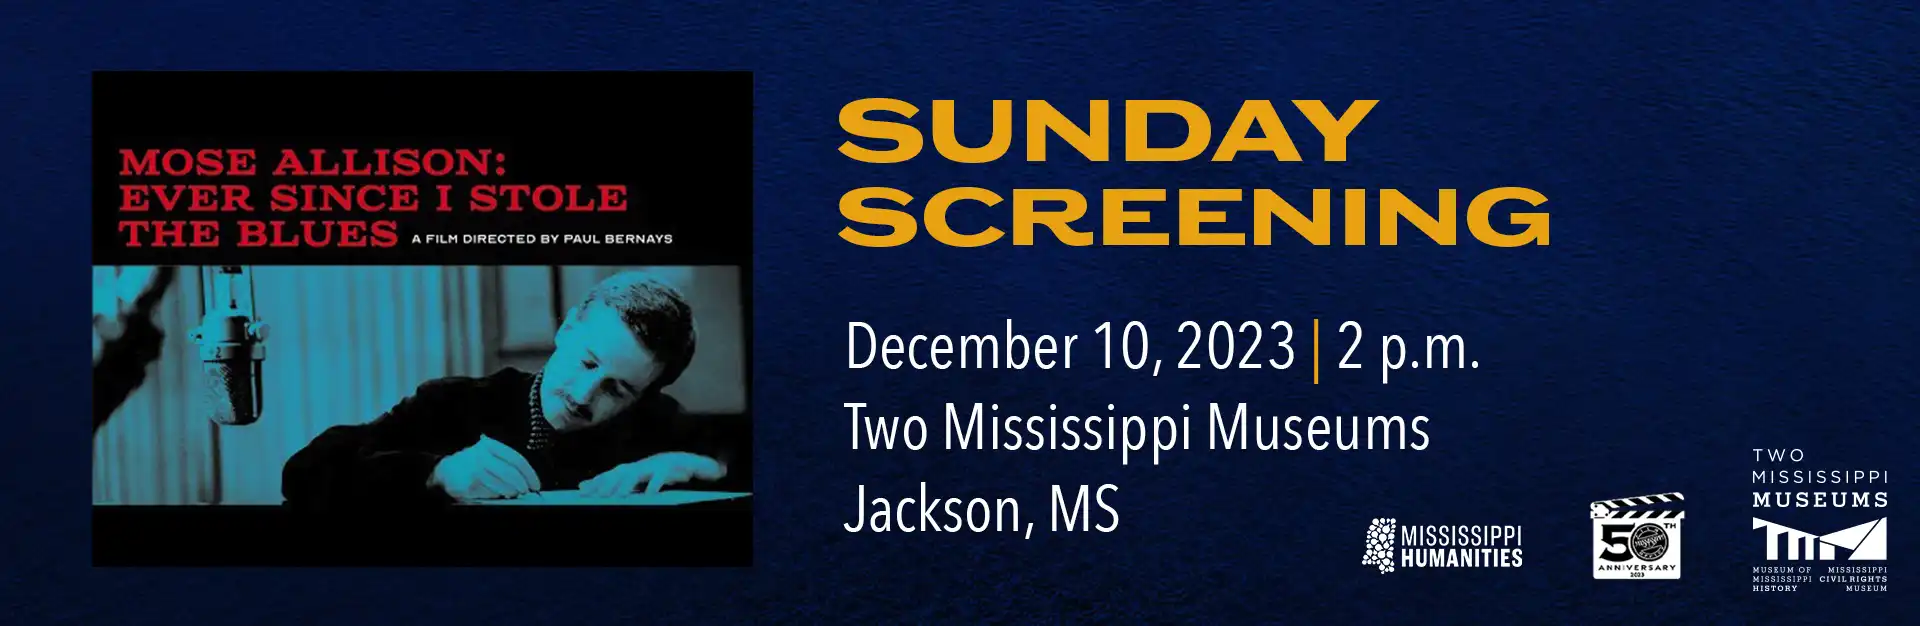 Sunday Screening - Dec 10, 2023 - Mose Allison